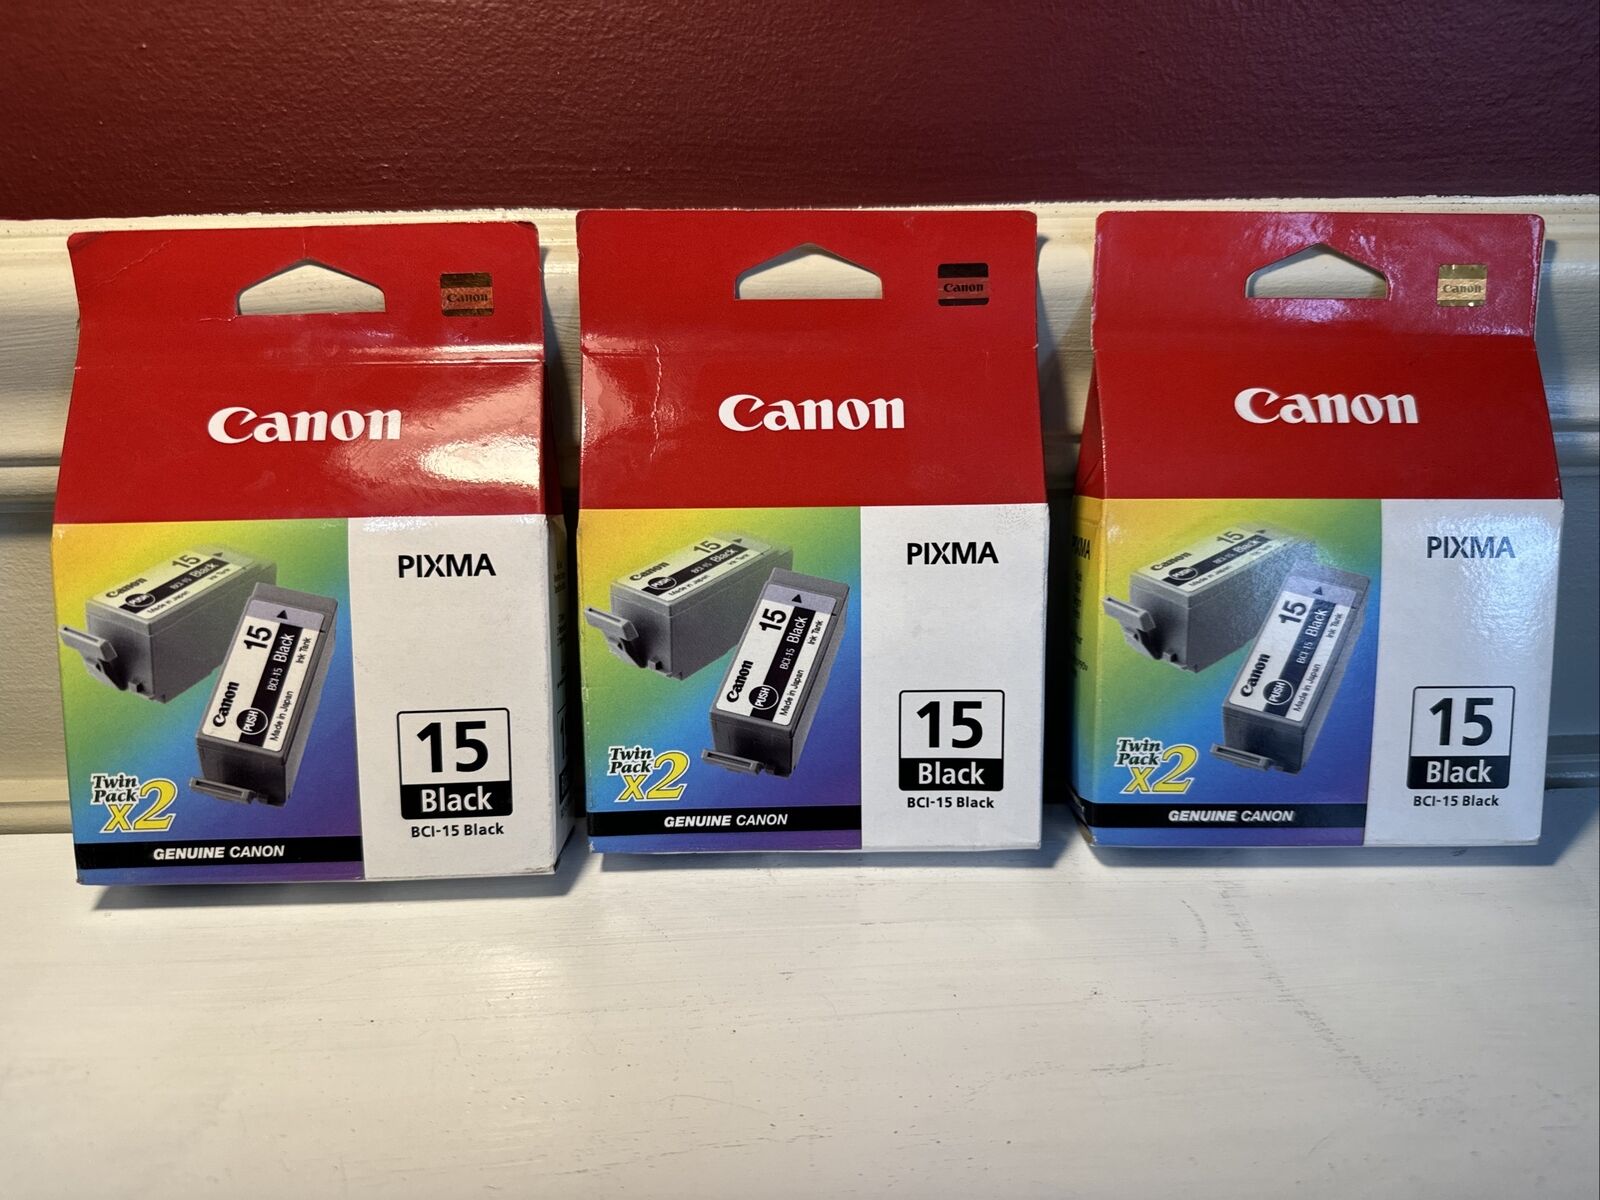 3 BOXES Canon Pixma Black Ink Tank Cartridge - BCI-15 twin Pack X2